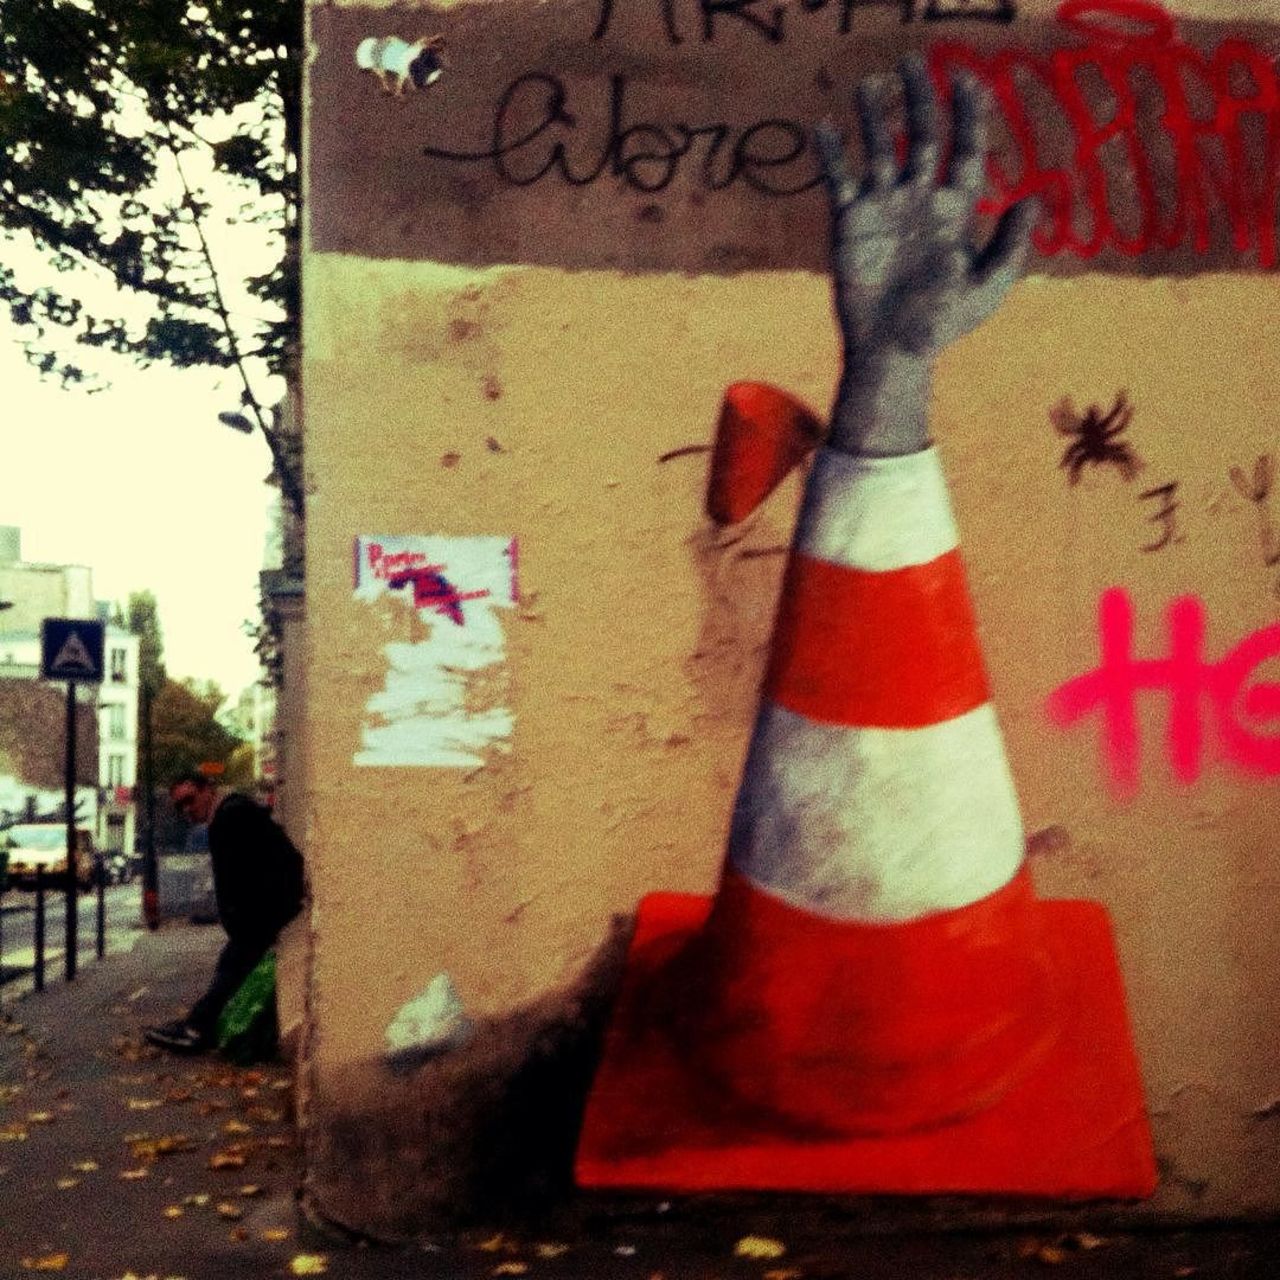 #Paris #graffiti photo by @noamzucker http://ift.tt/1OXoEel #StreetArt https://t.co/m1eQWYl7x6